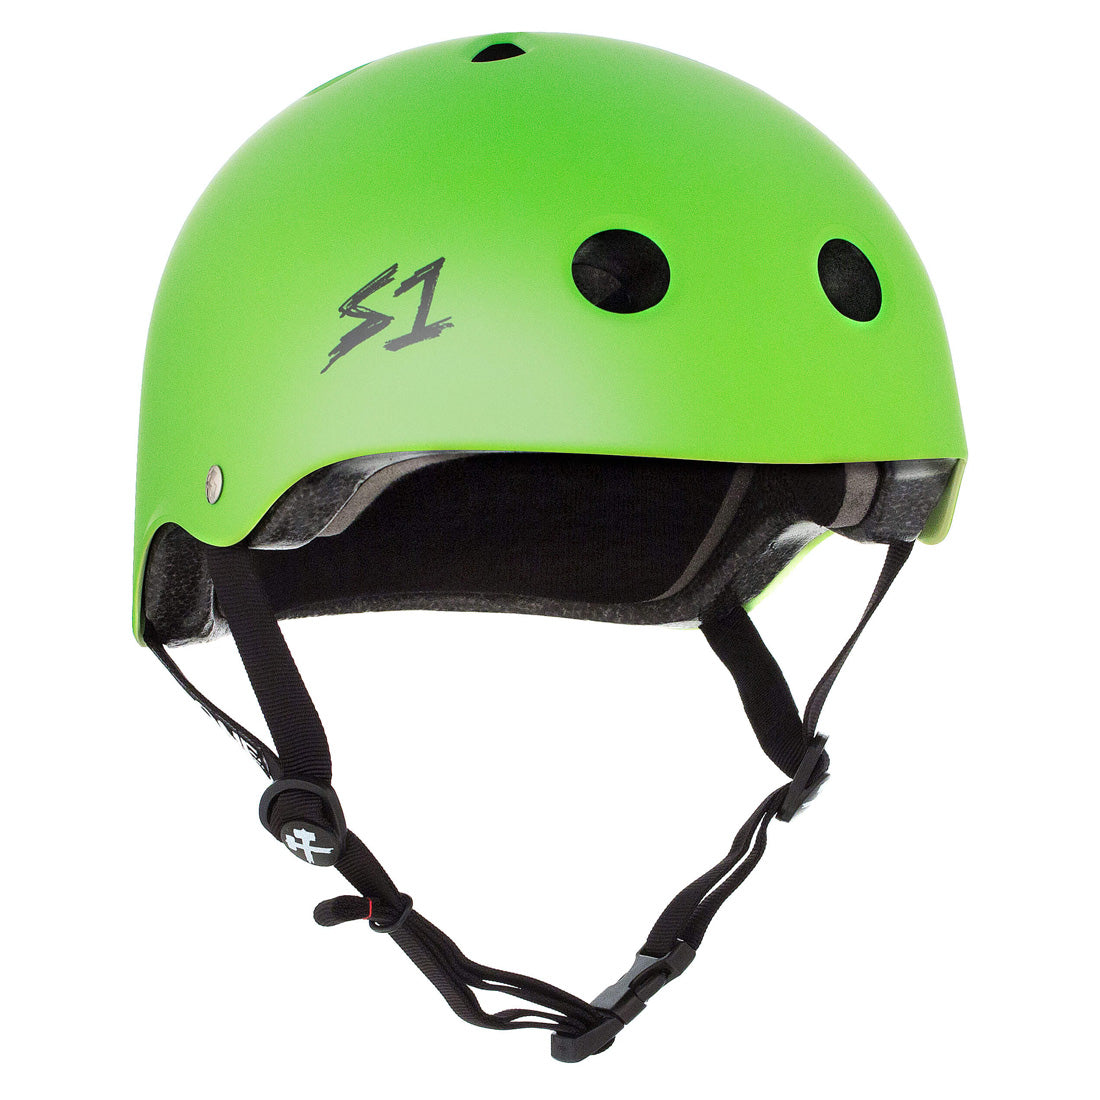 S-One Lifer Helmet - Bright Green Matte Helmets